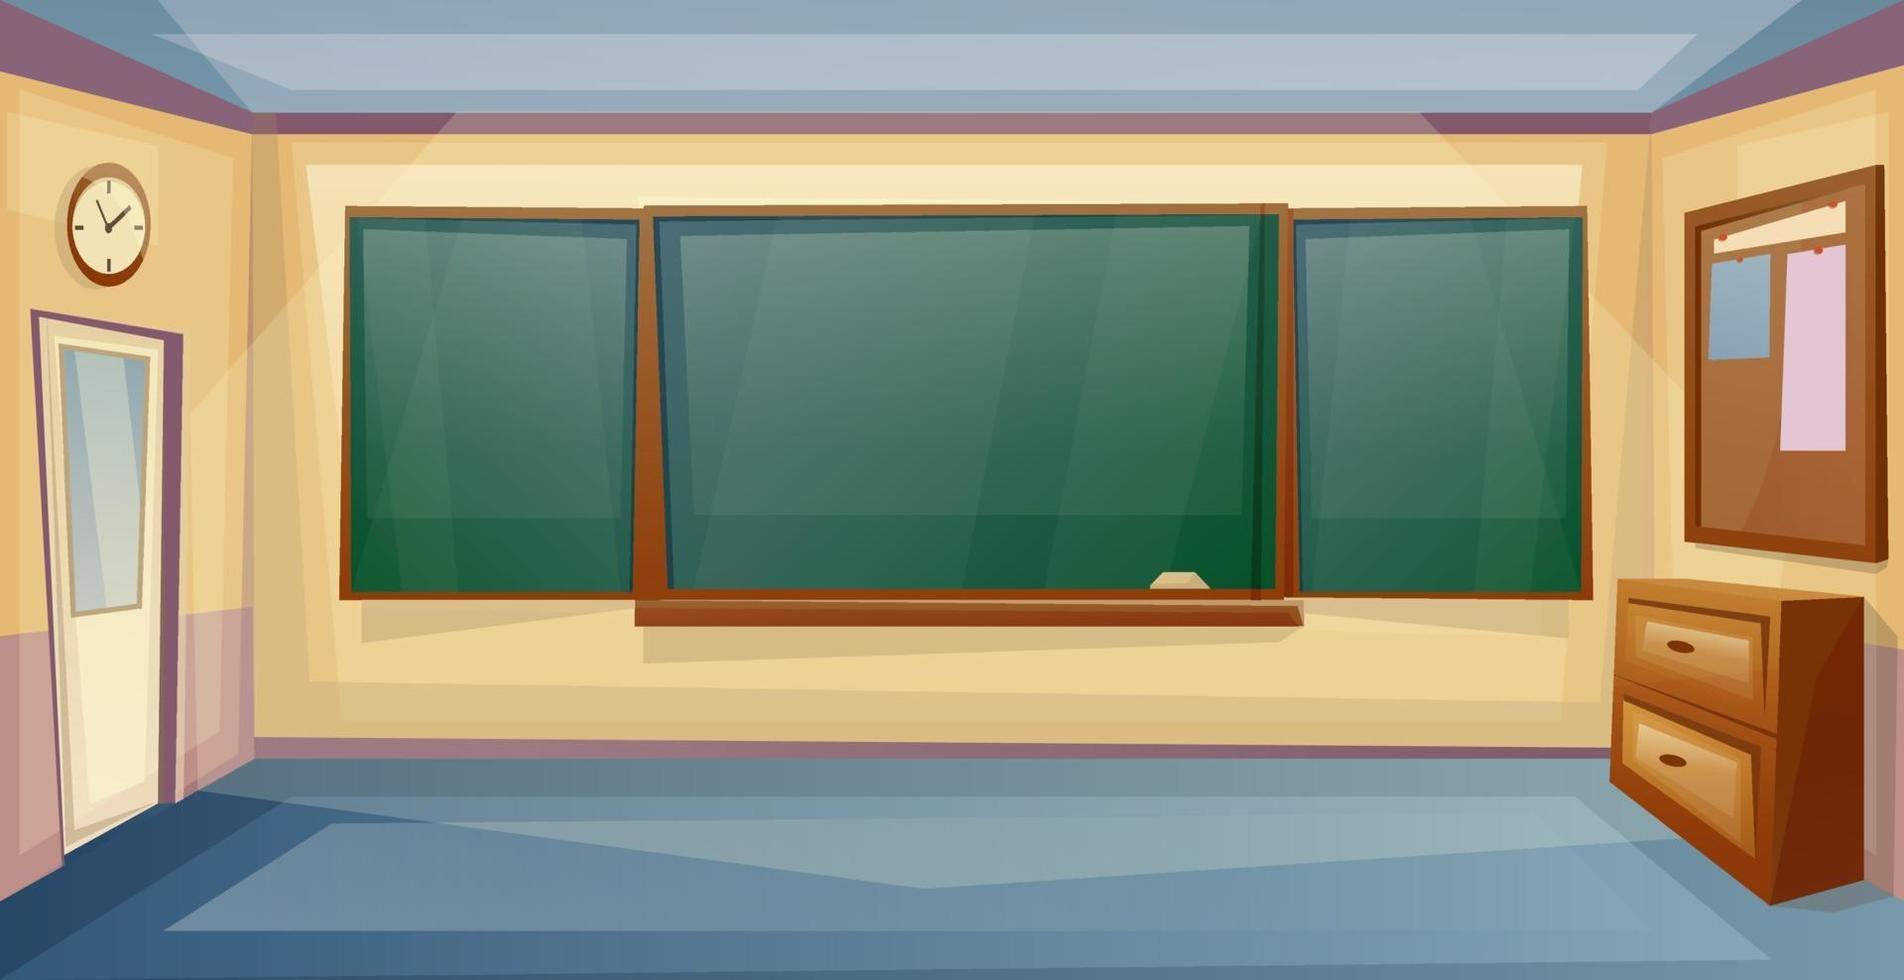 school klas interieur met bureau en bord. les. lege universiteitskamer. vector cartoon